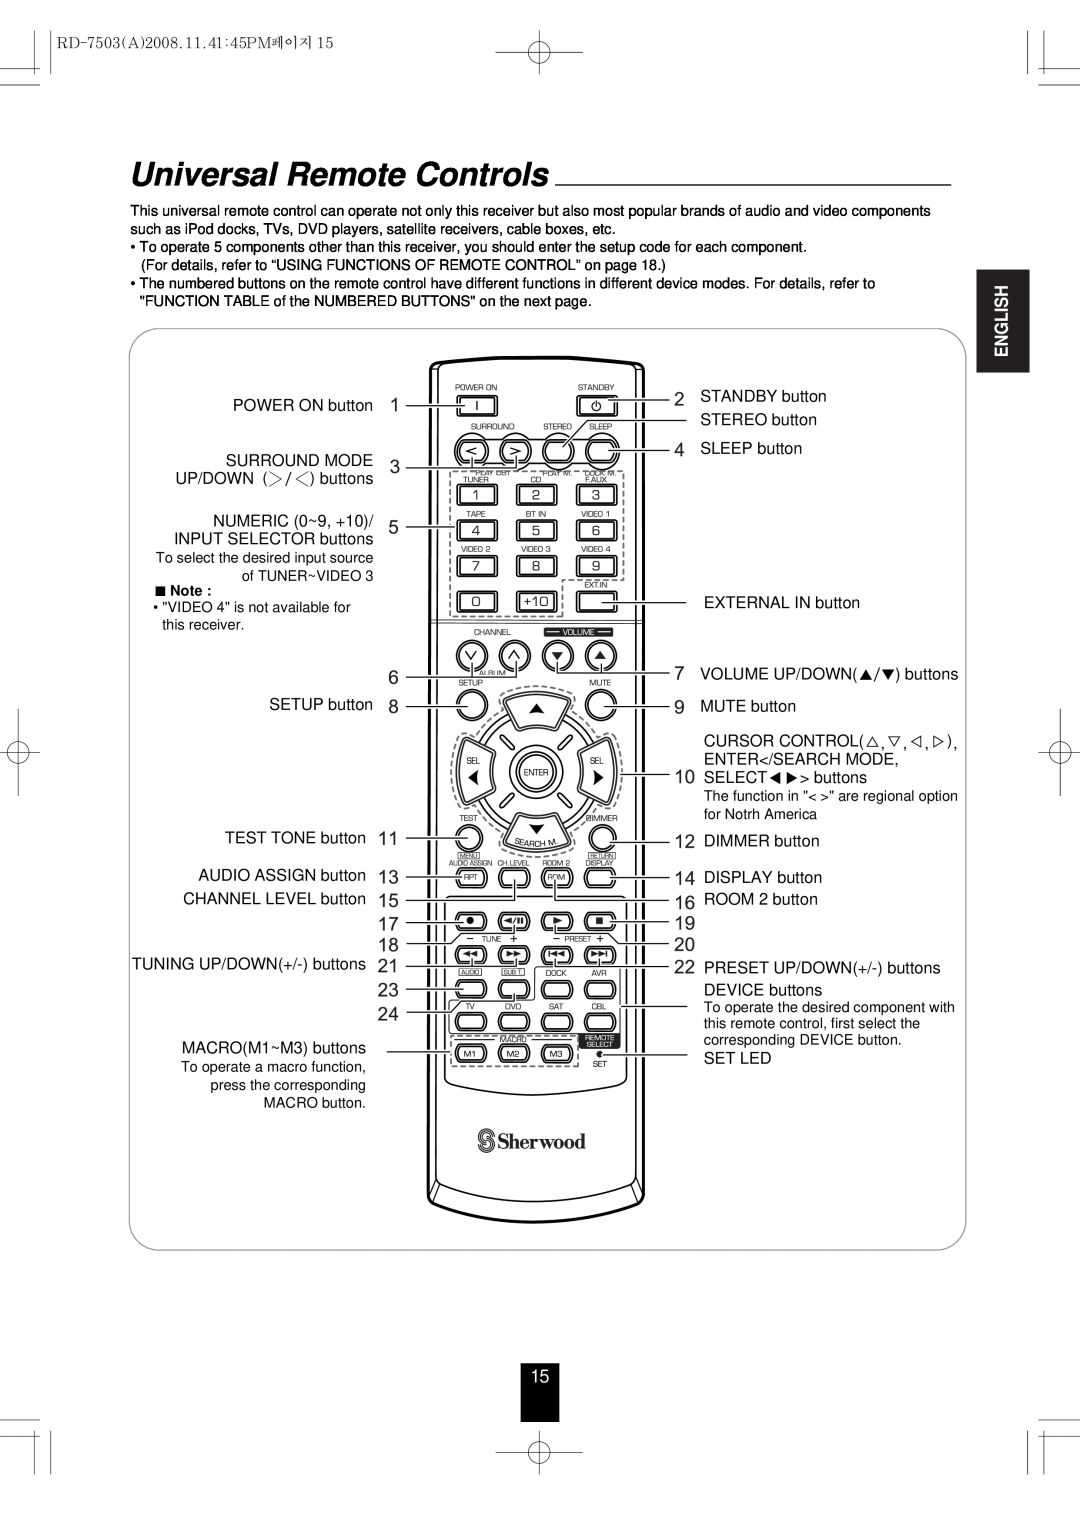 Sherwood RD-7503 manual Universal Remote Controls, English 